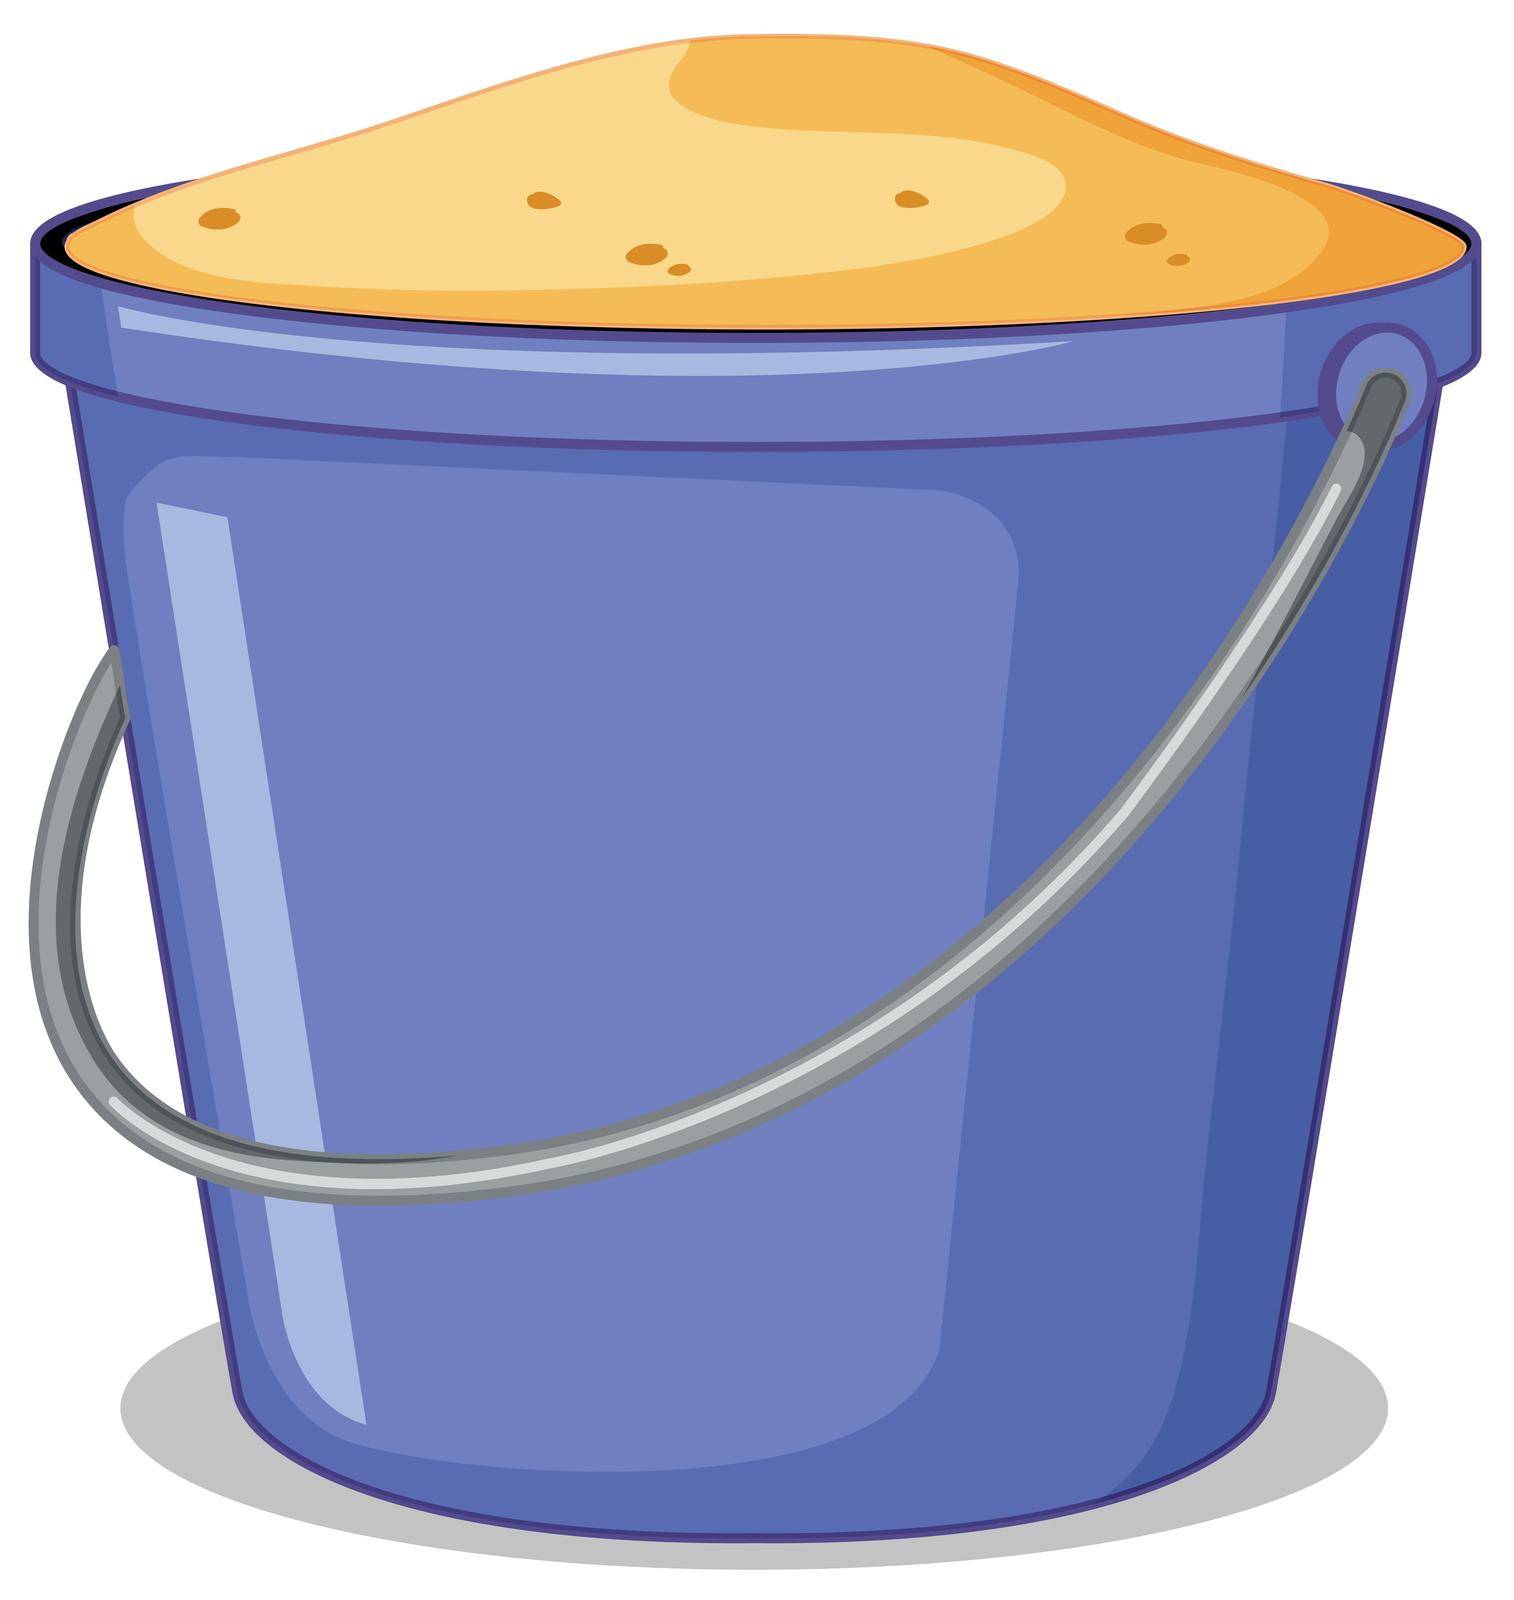 Bucket of sand object illustration